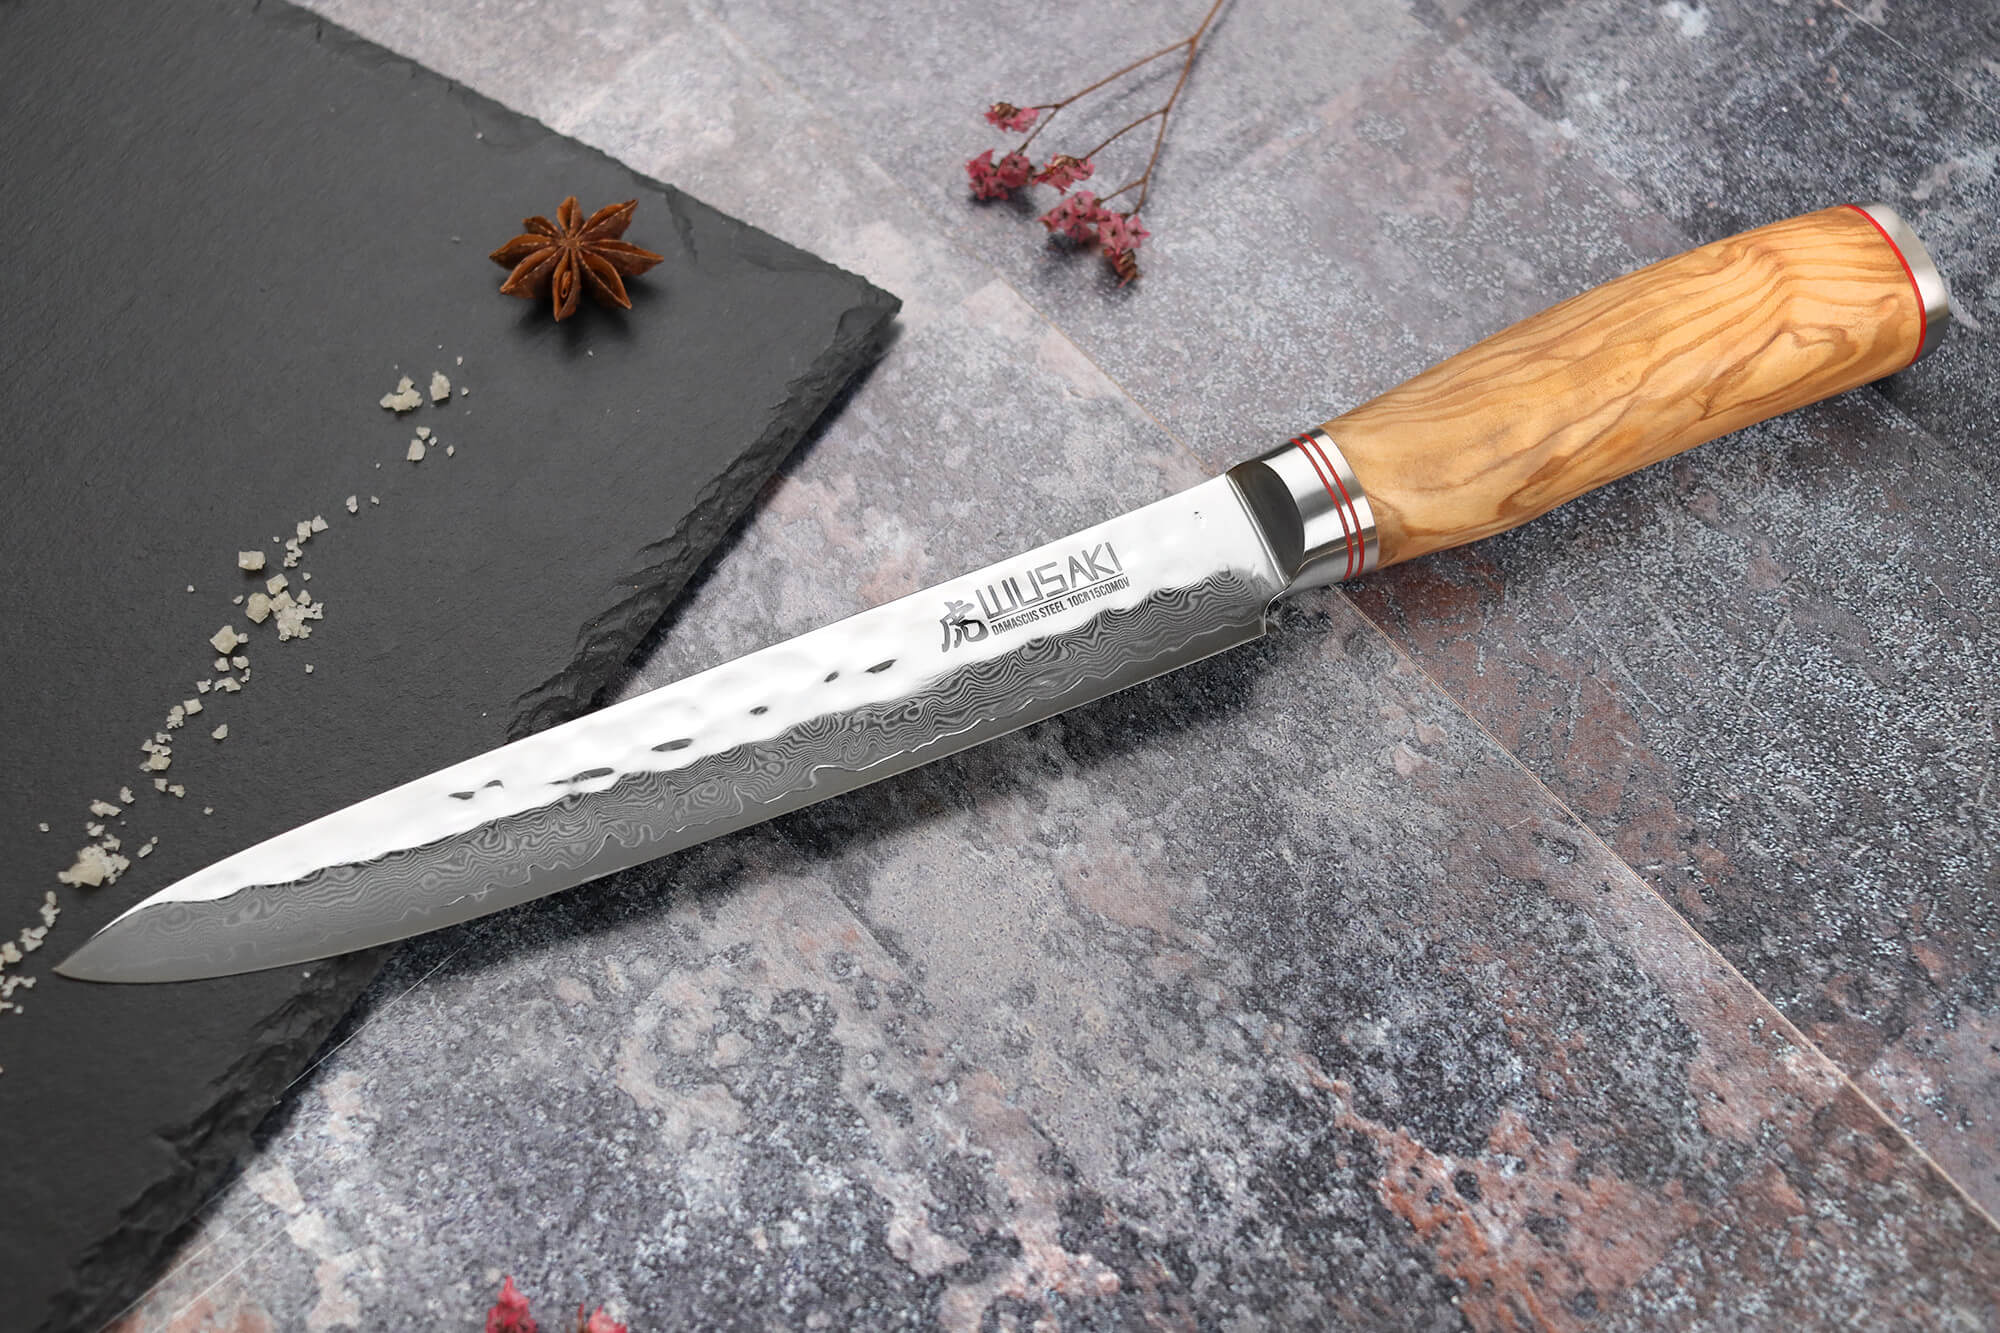 Couteau de chef Wusaki Damas 10Cr 20cm - Coup de cœur